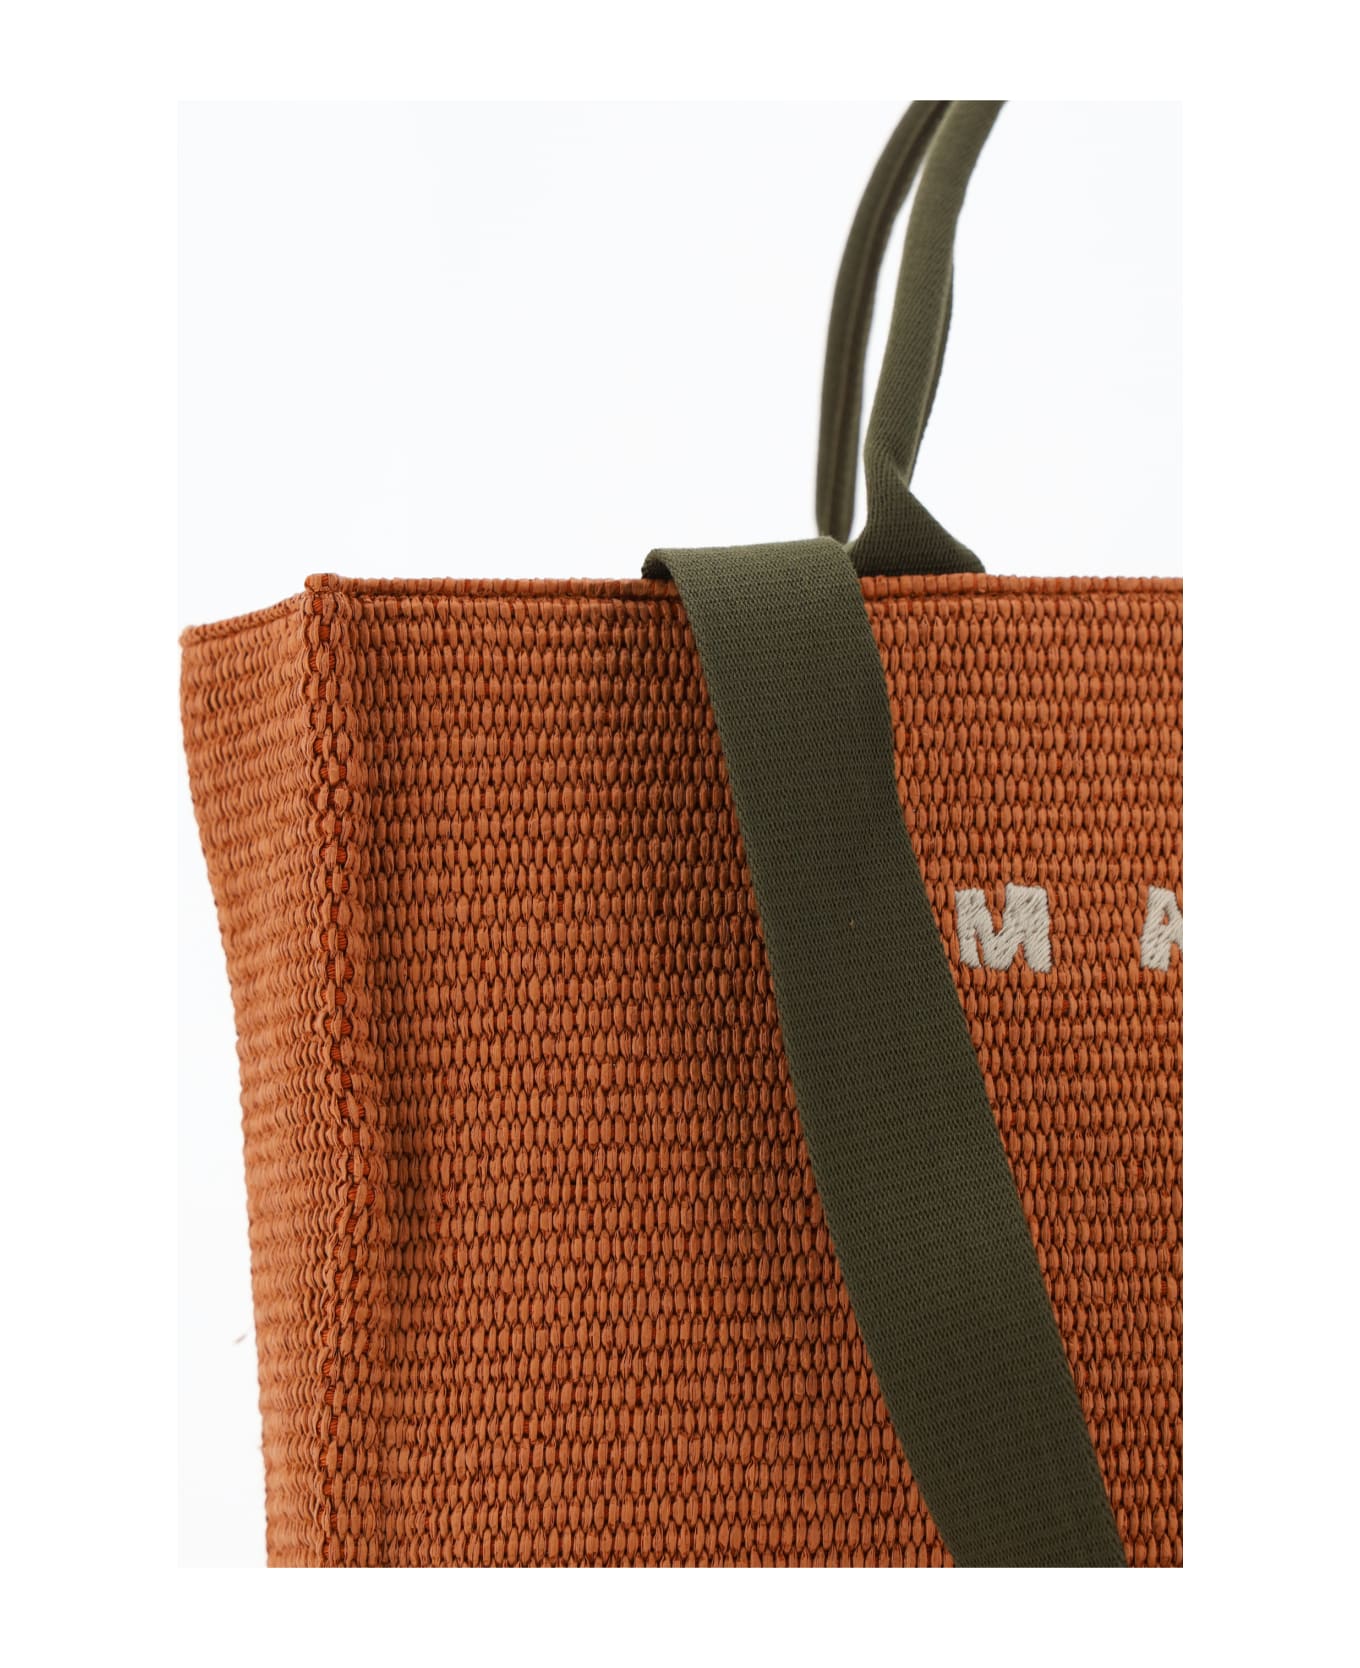 Marni Handbag - Brick/olive トートバッグ